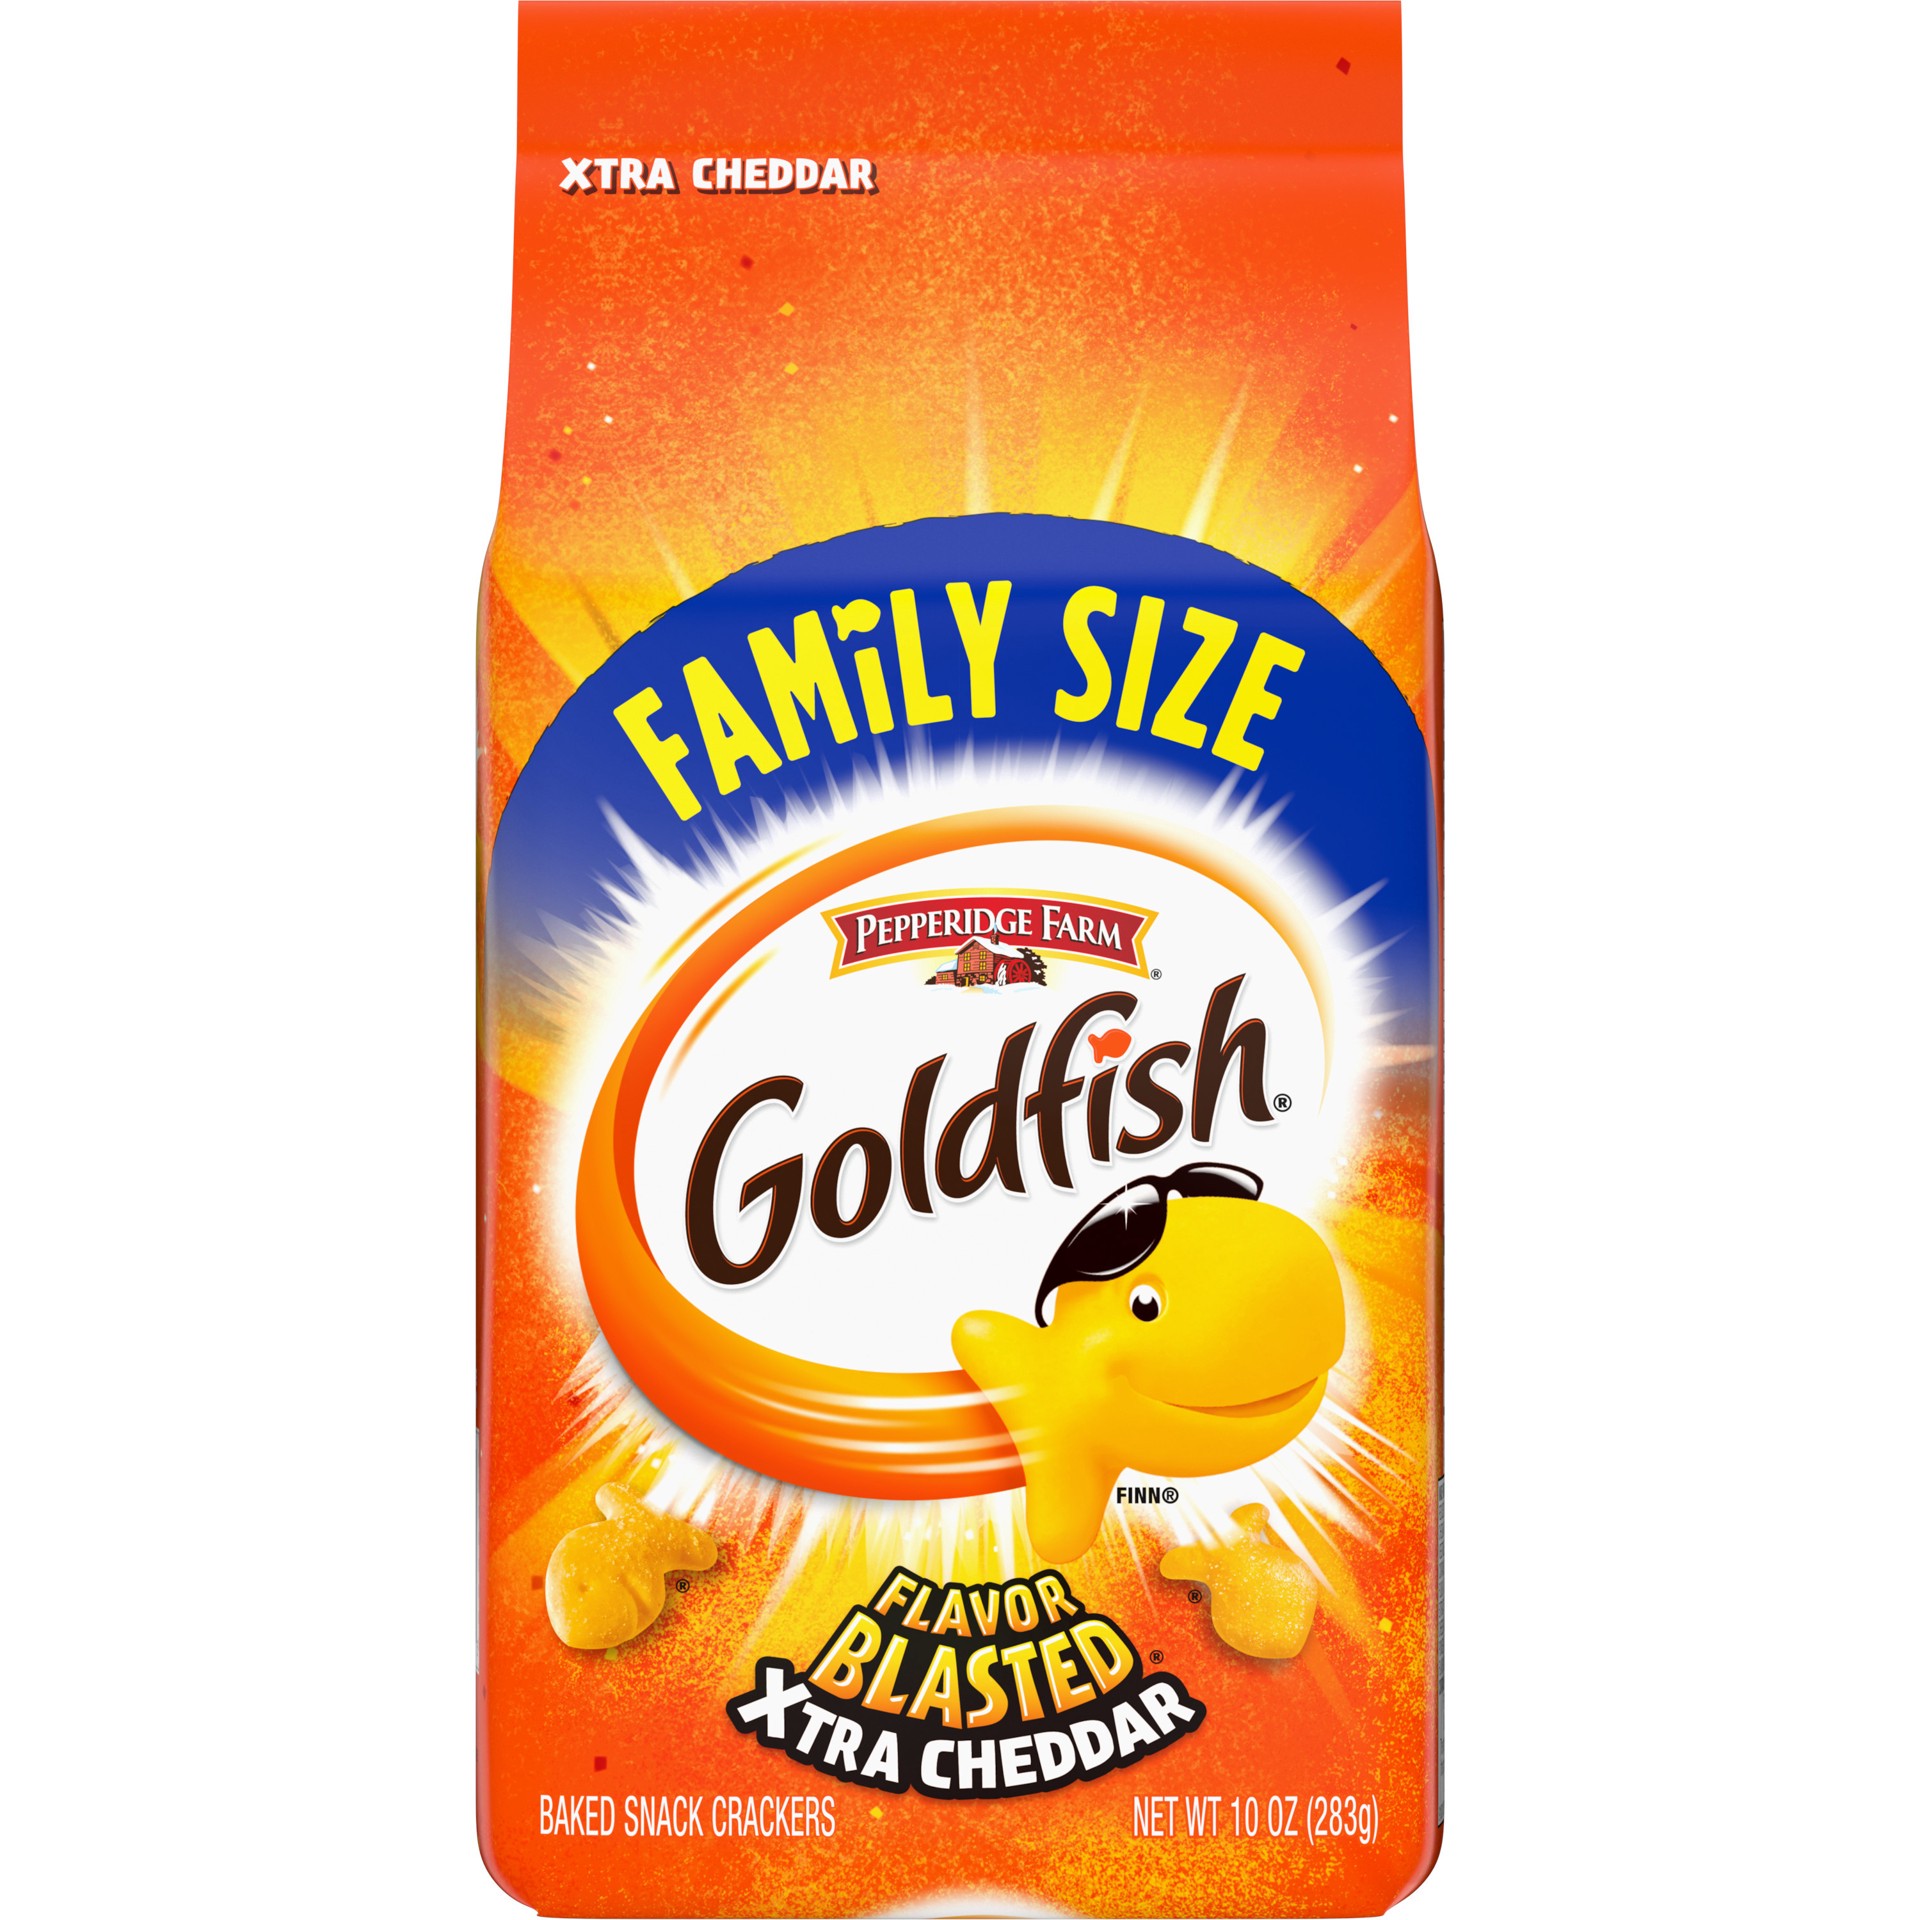 slide 1 of 10, Pepperidge Farm Goldfish Crackers, Flavor Blasted Xtra Cheddar Crackers, Family Size, 10 Oz Bag, 10 oz